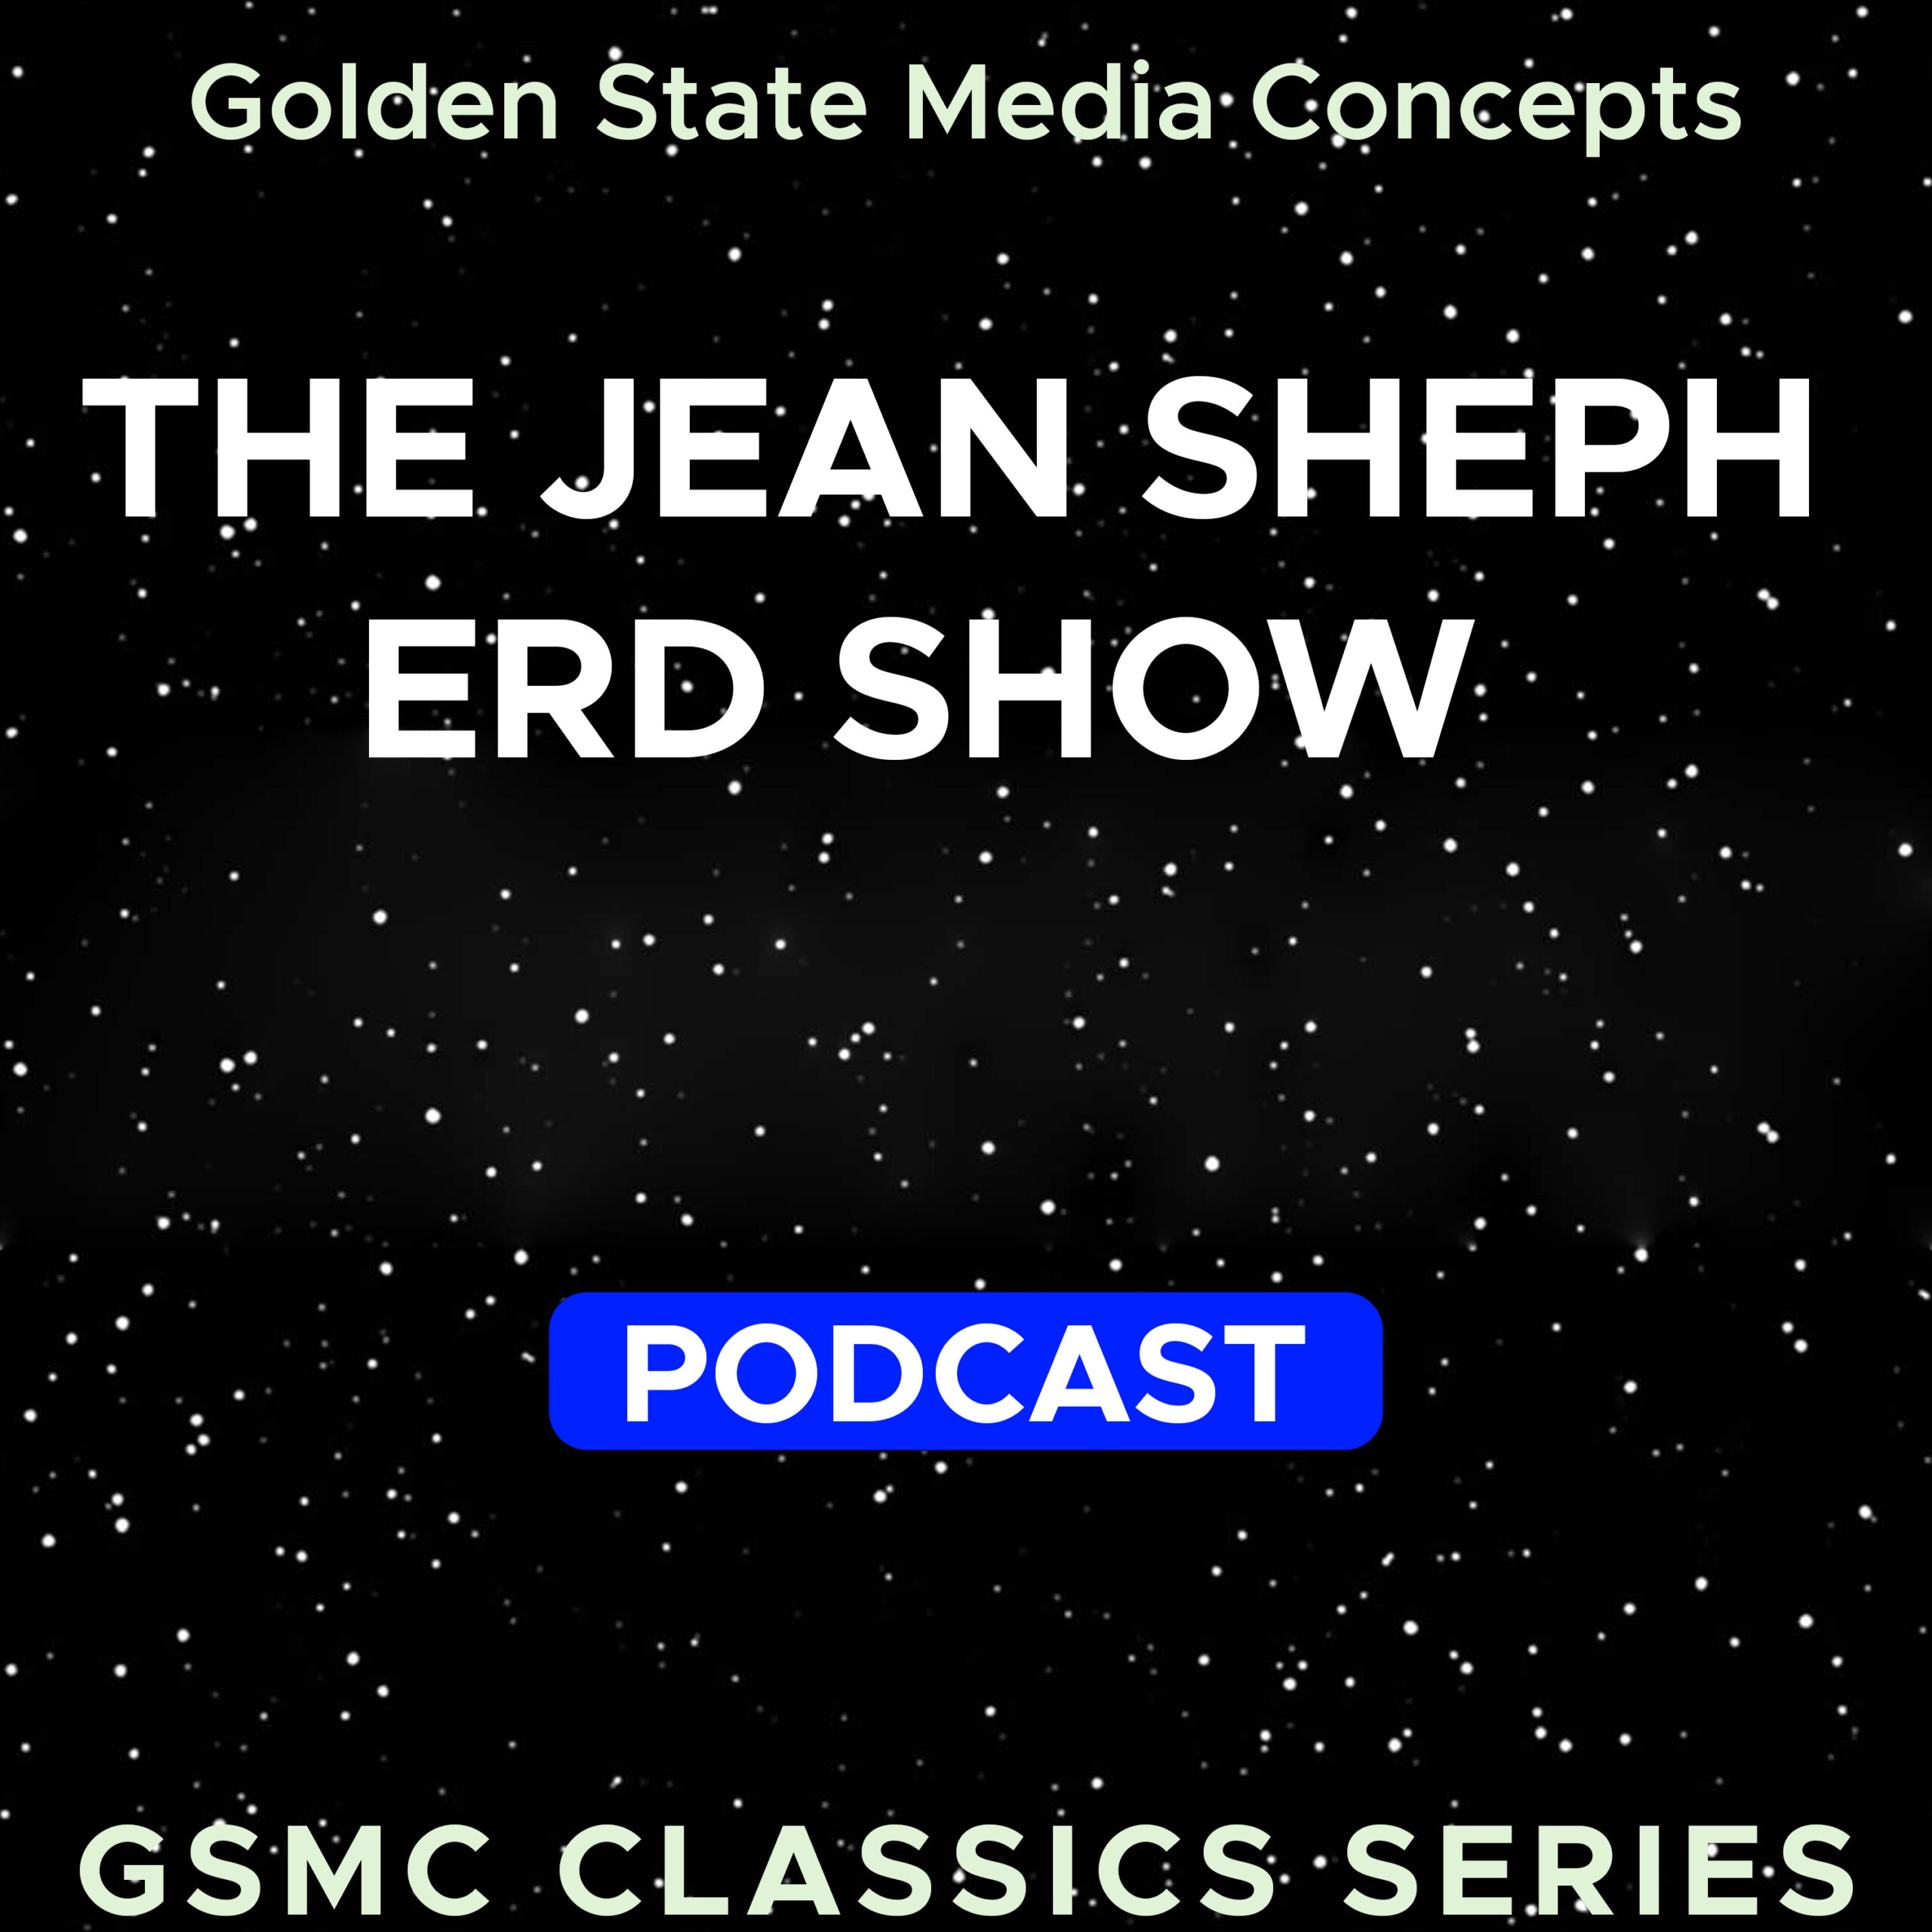 The Jean Shepherd Show